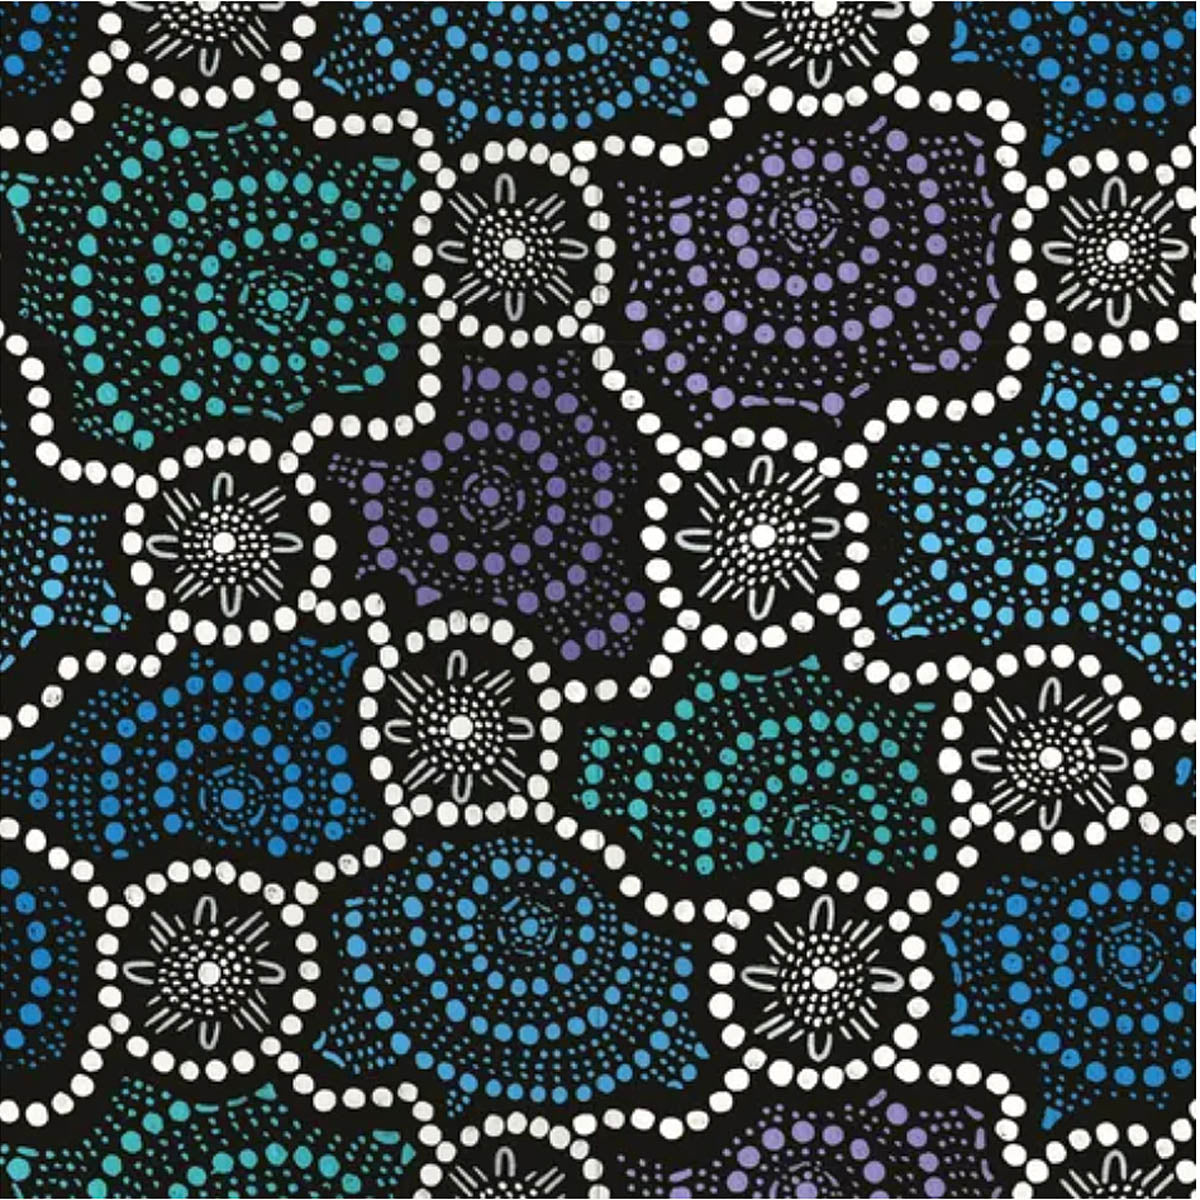 DV/ SALTWATER DREAMTIME #5579 by Aboriginal Artist Zachary Bennett-Brook